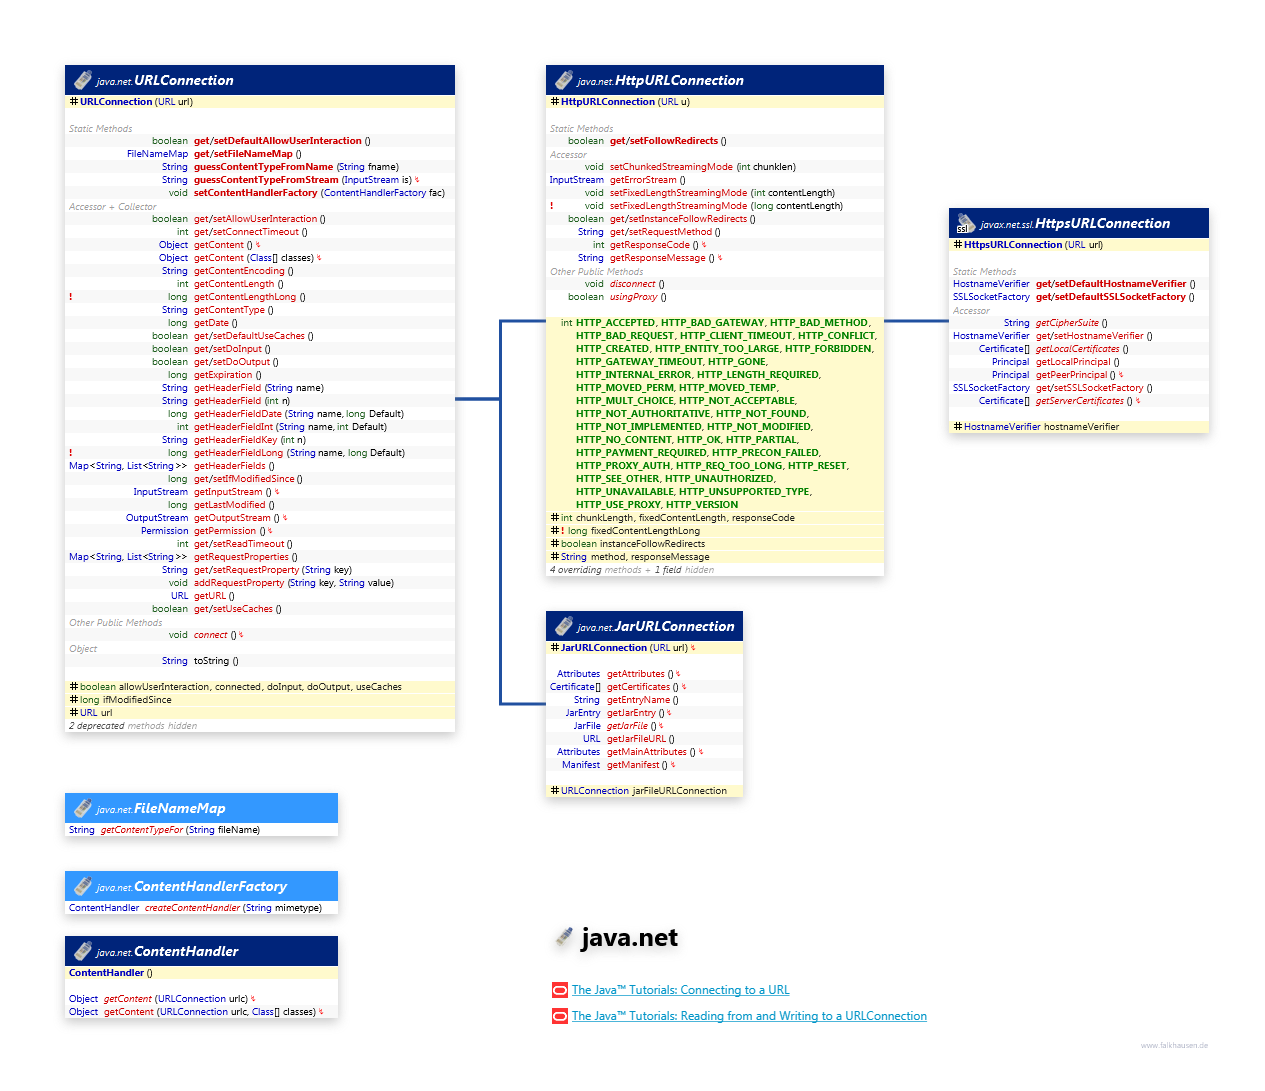 java.net URLConnection class diagram and api documentation for Java 7